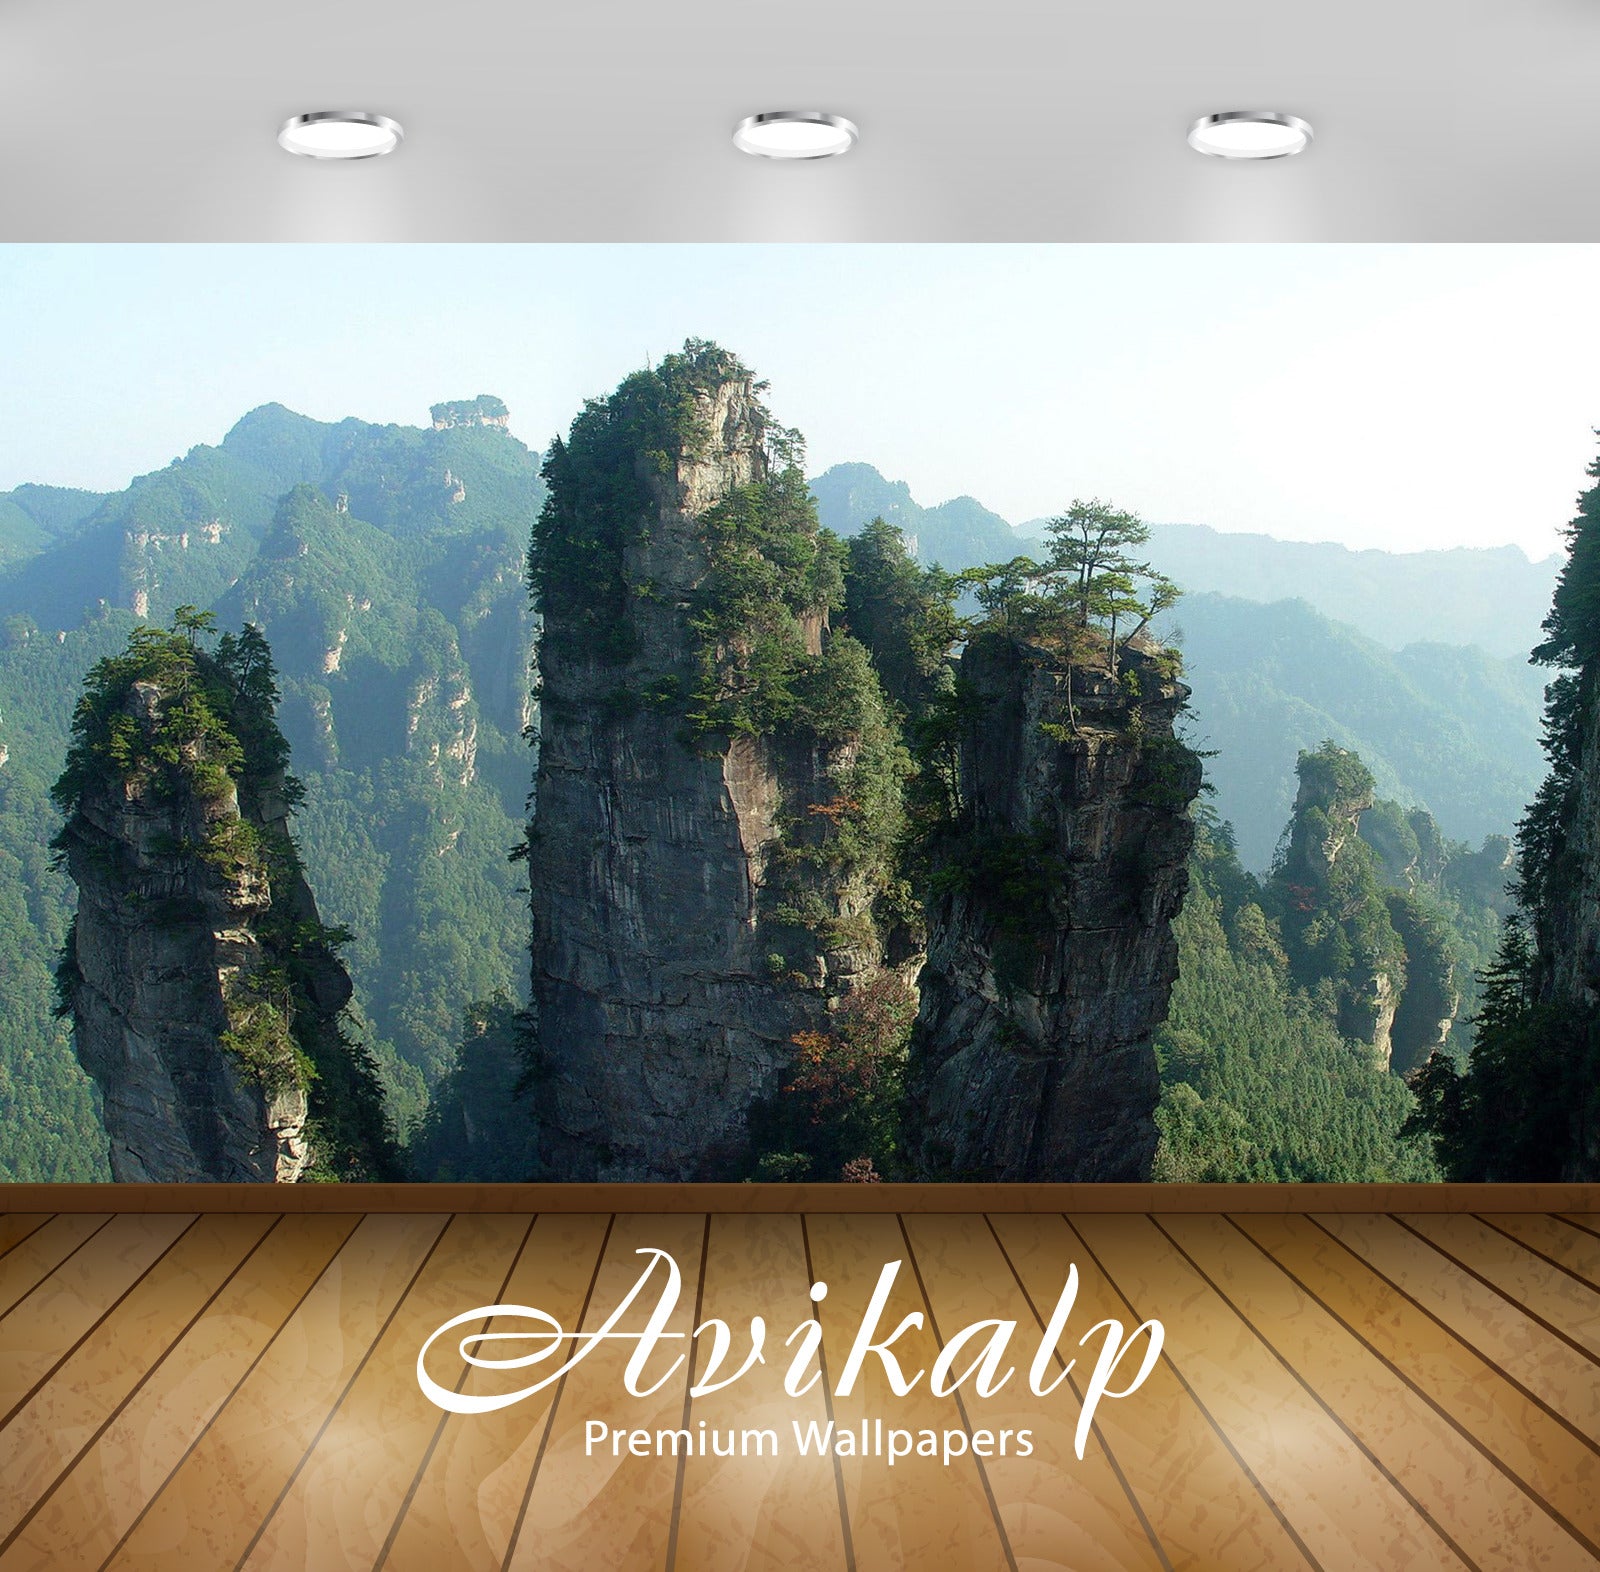 Avikalp Exclusive Awi6572 Tianzi Mountains China Nature Full HD Wallpapers for Living room, Hall, Ki